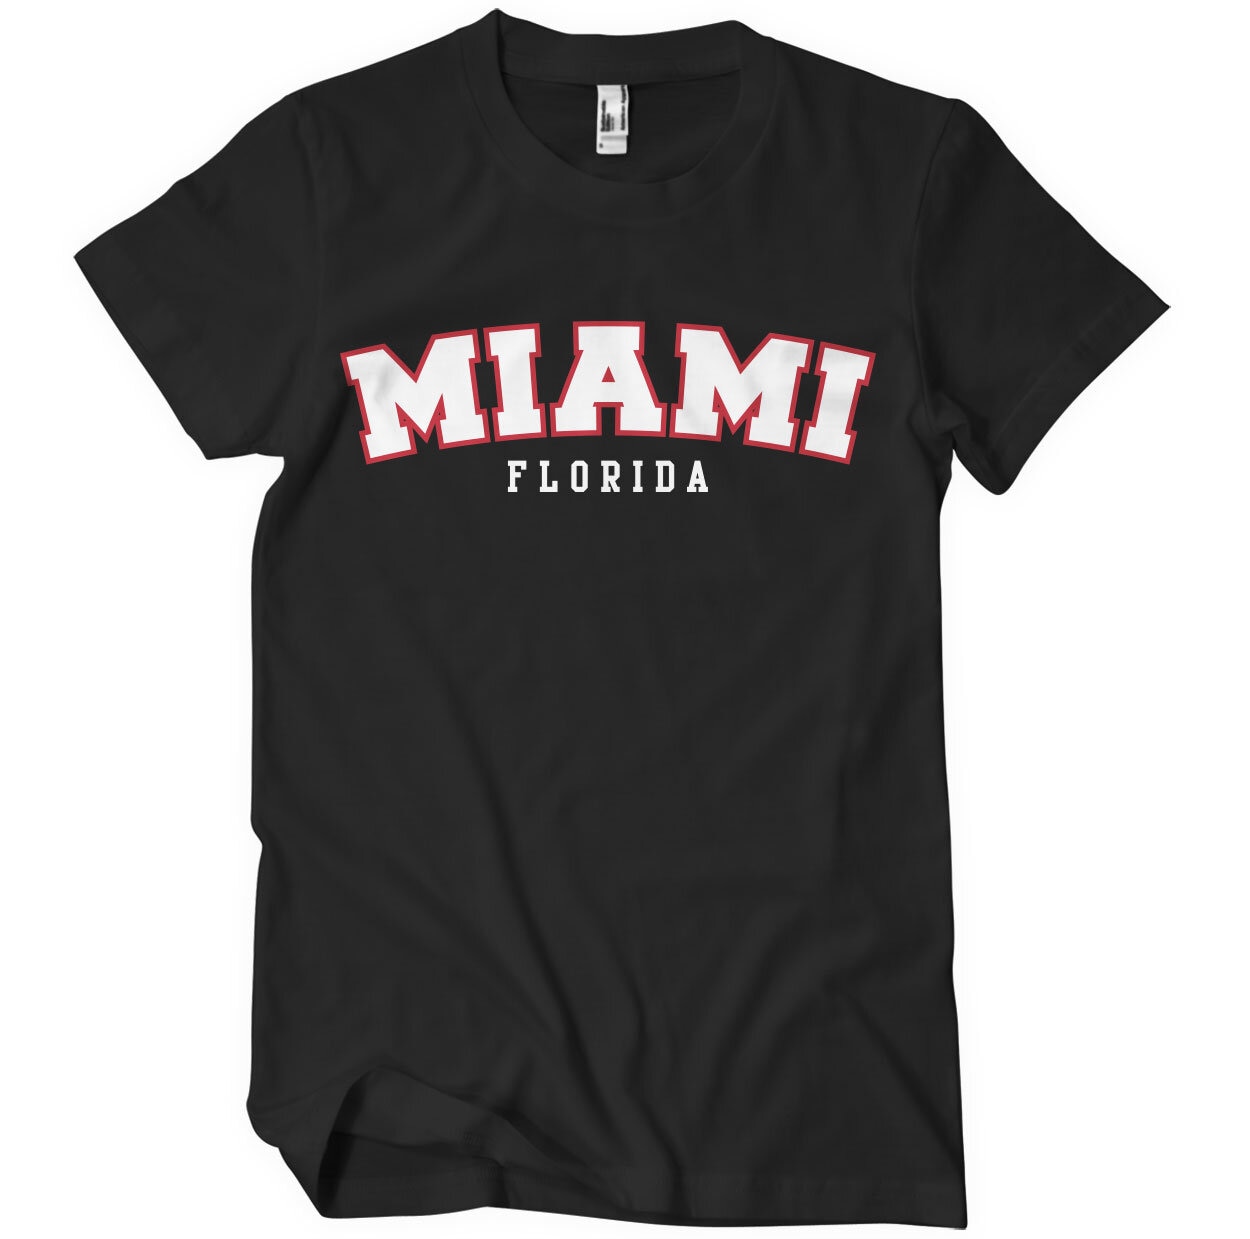 Miami - Florida T-Shirt